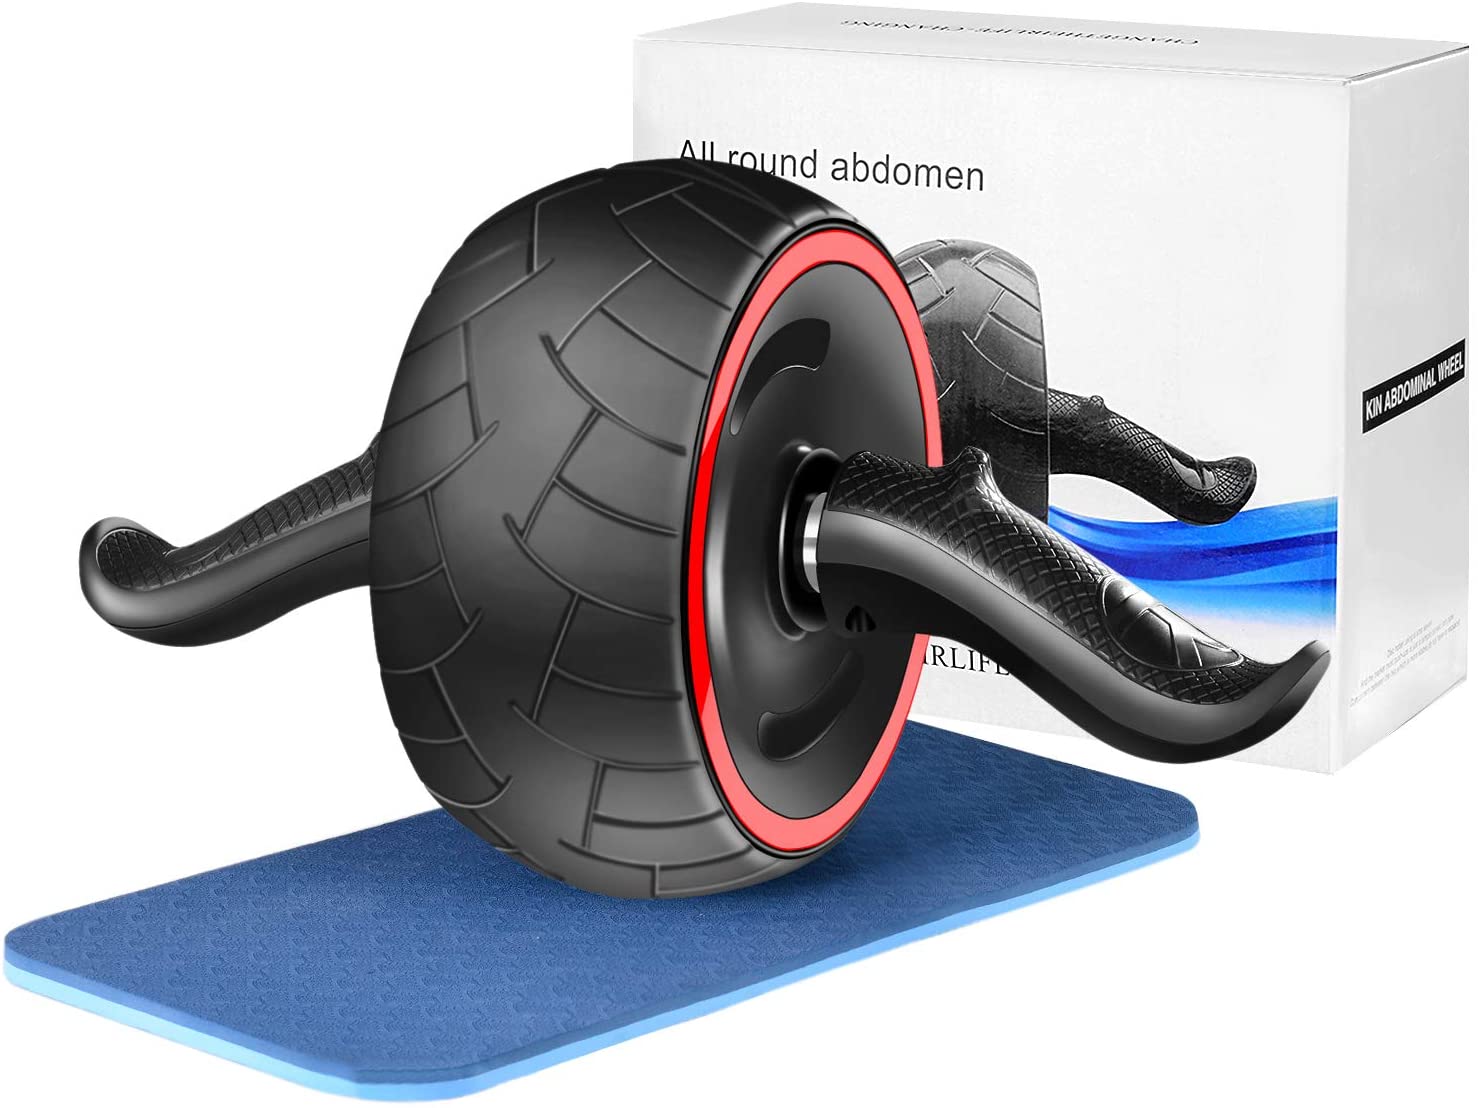 Exercices avec la roue abdominale (ab wheel) - HOME FIT TRAINING